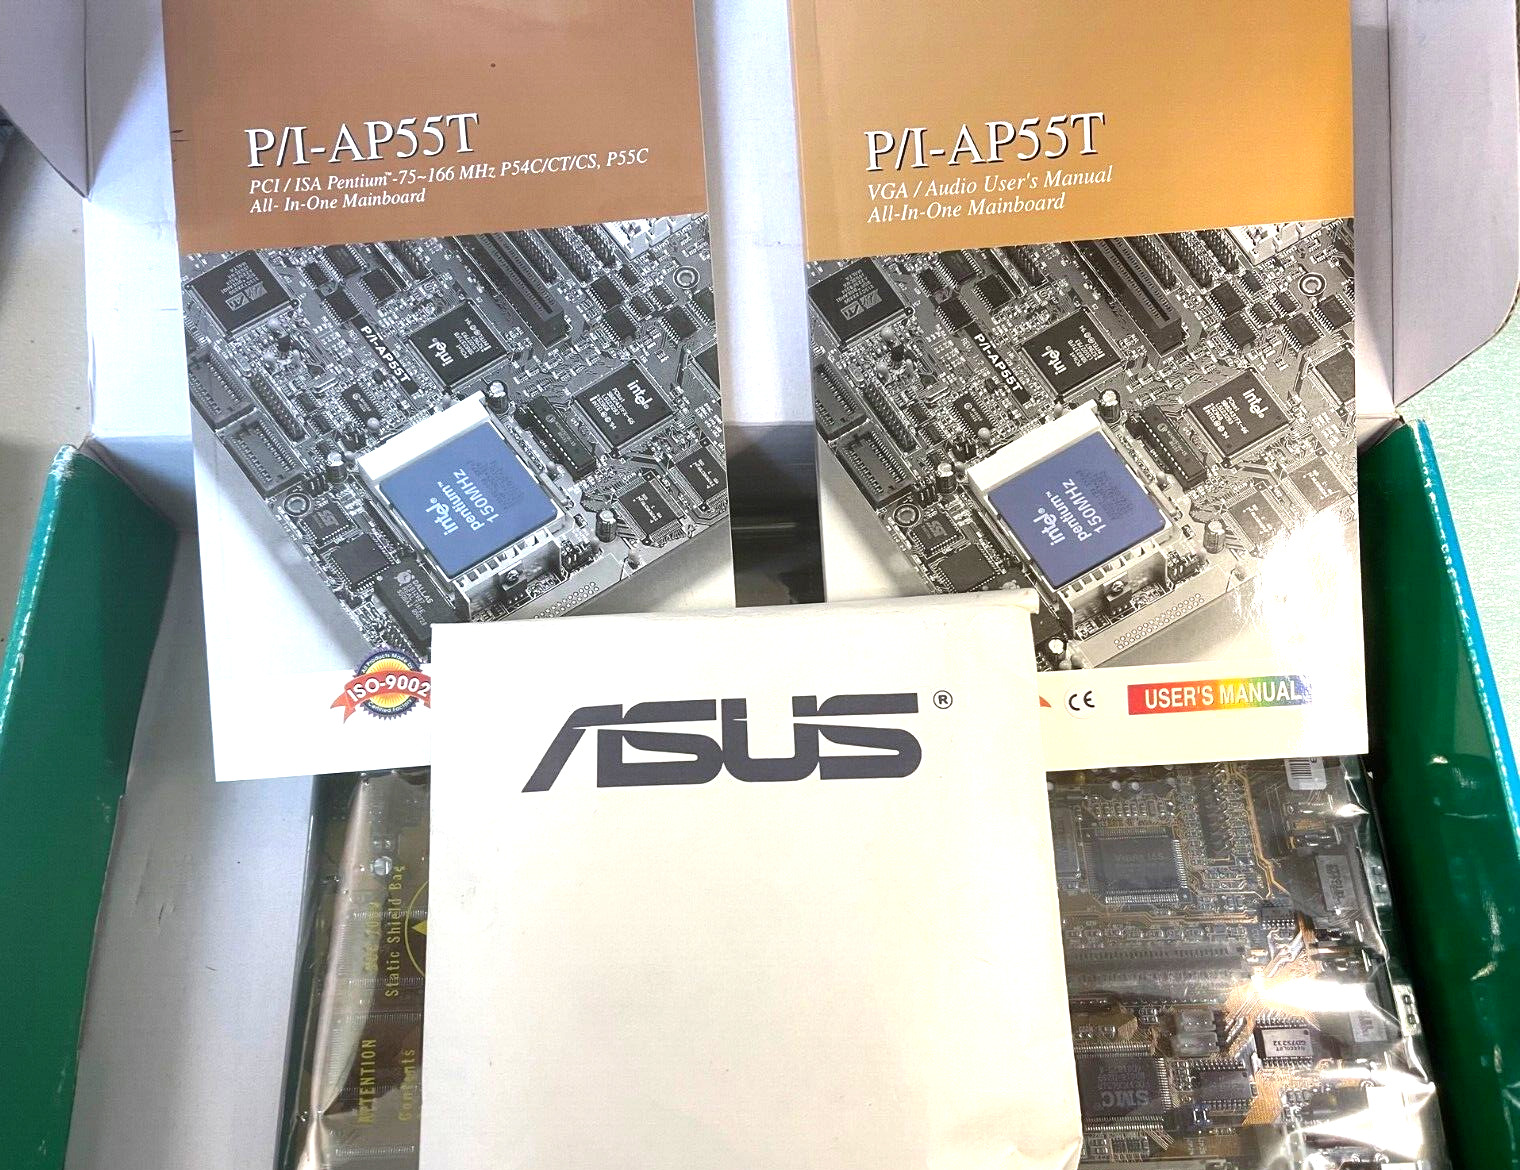 ASUS PCI/I-AP55T PENTIUM 90 TO 200MHZ LPX VGA MOTHERBOARD MANUAL DRIVER MBMX51